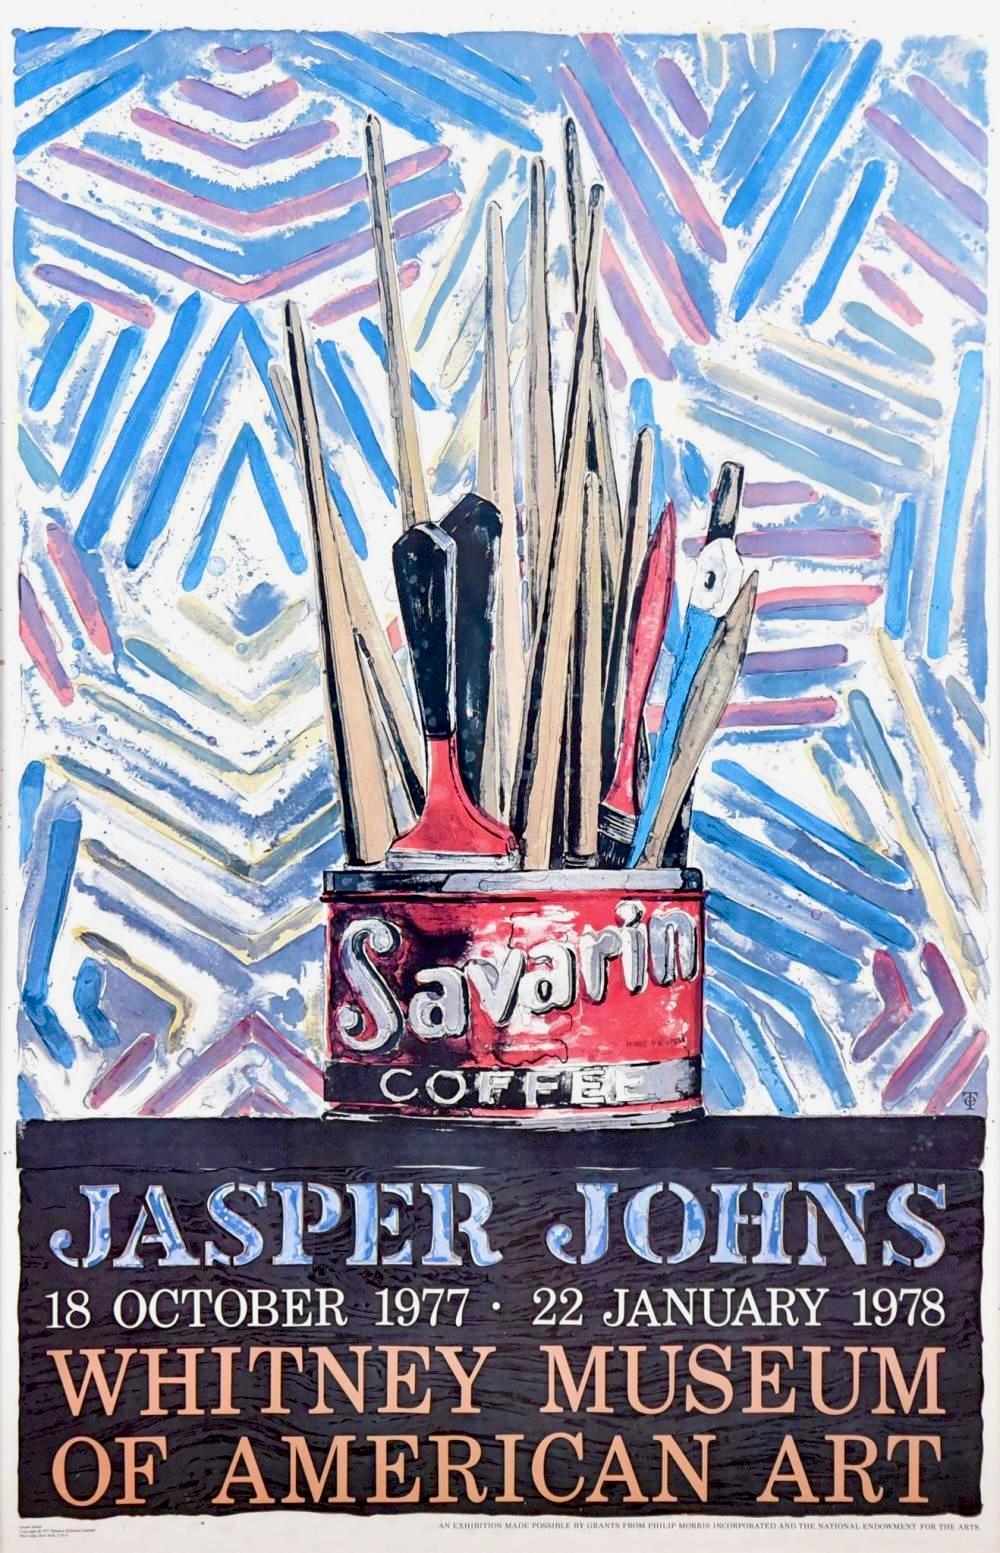 Johns, Savarin, Whitney Museum of American Art (nach)